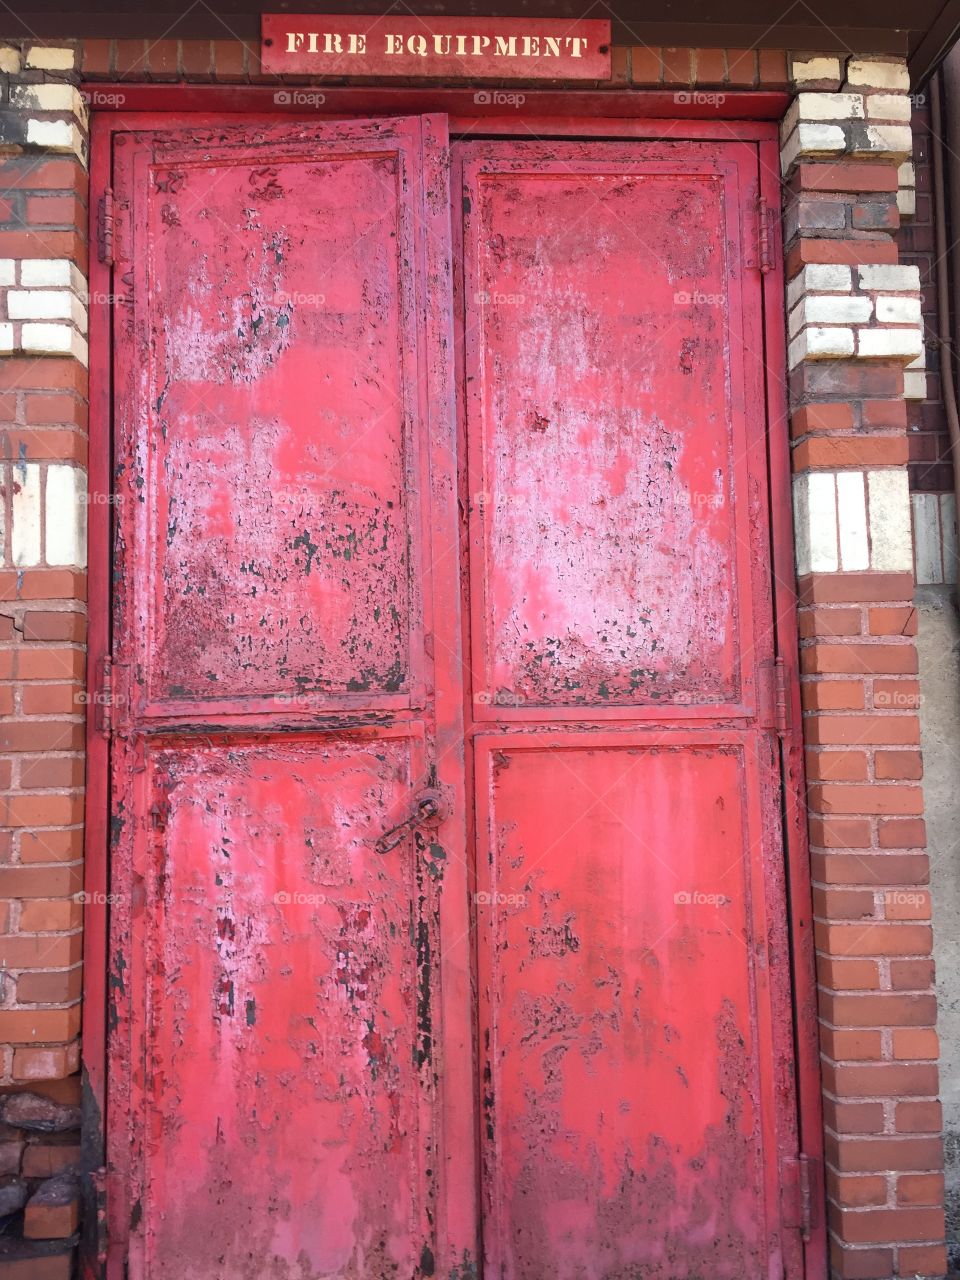 I see a red door.......